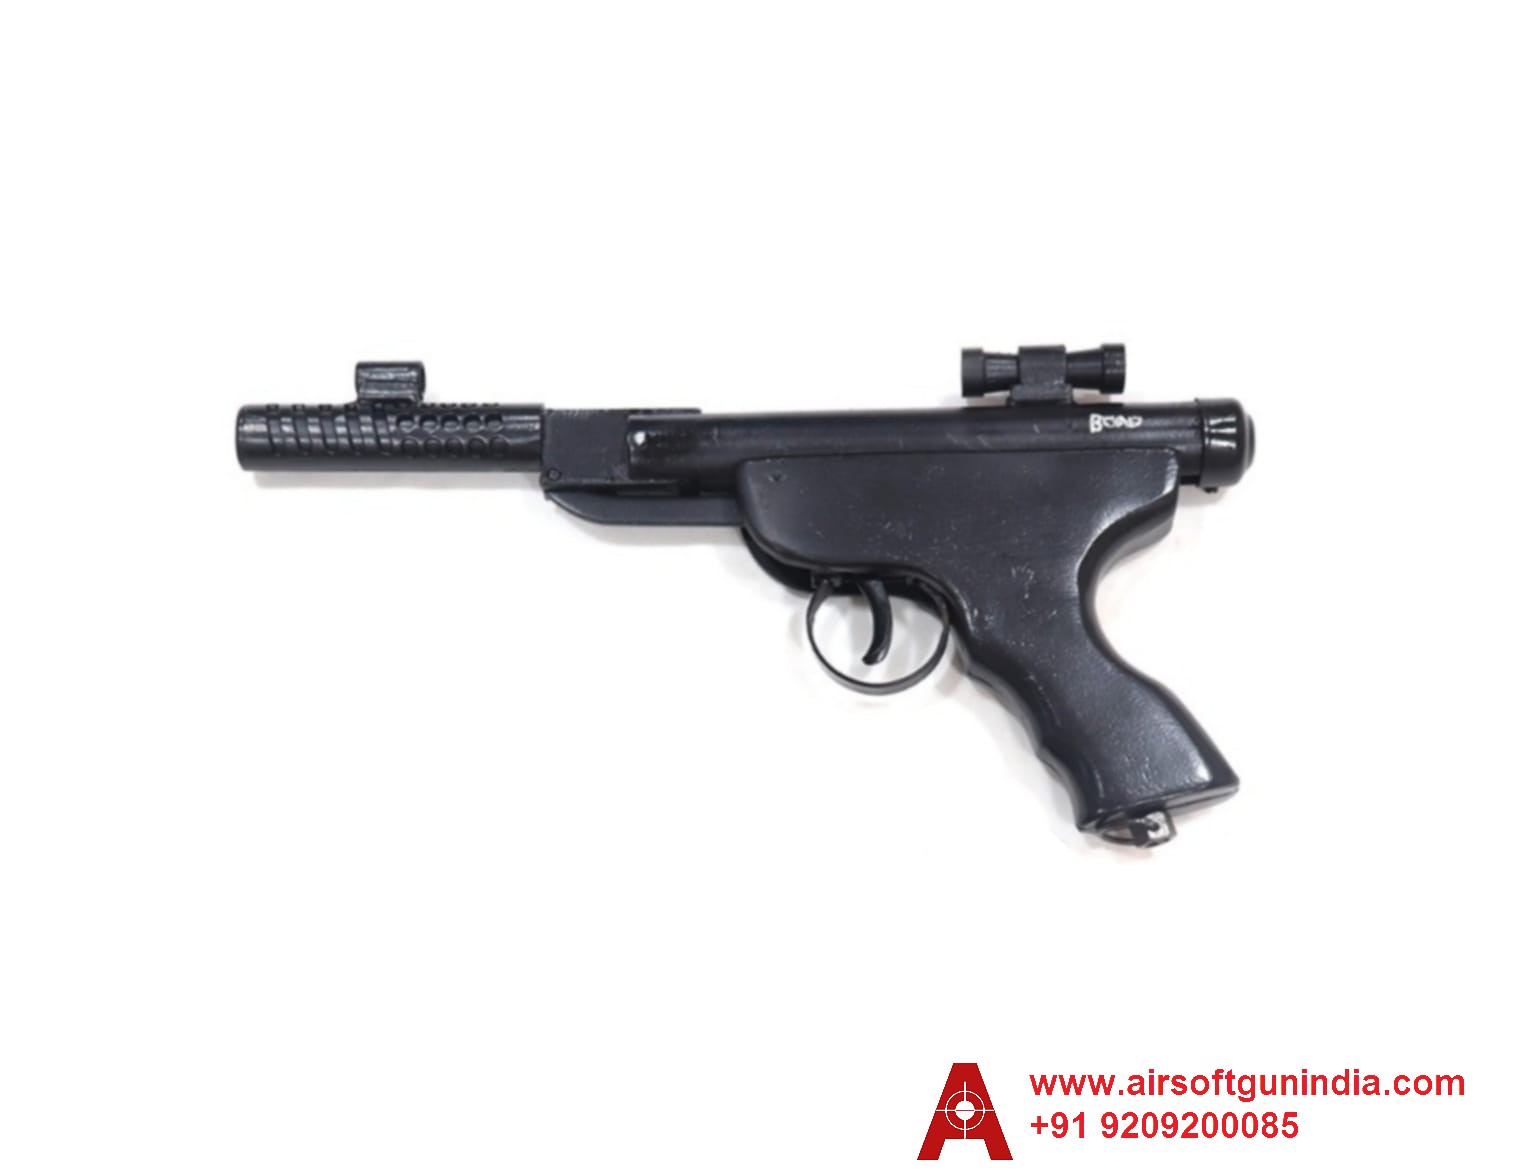 Bond Target Plus Metal Single-Shot .177 Caliber / 4.5 Mm Indian Air Pistol By Airsoft Gun India